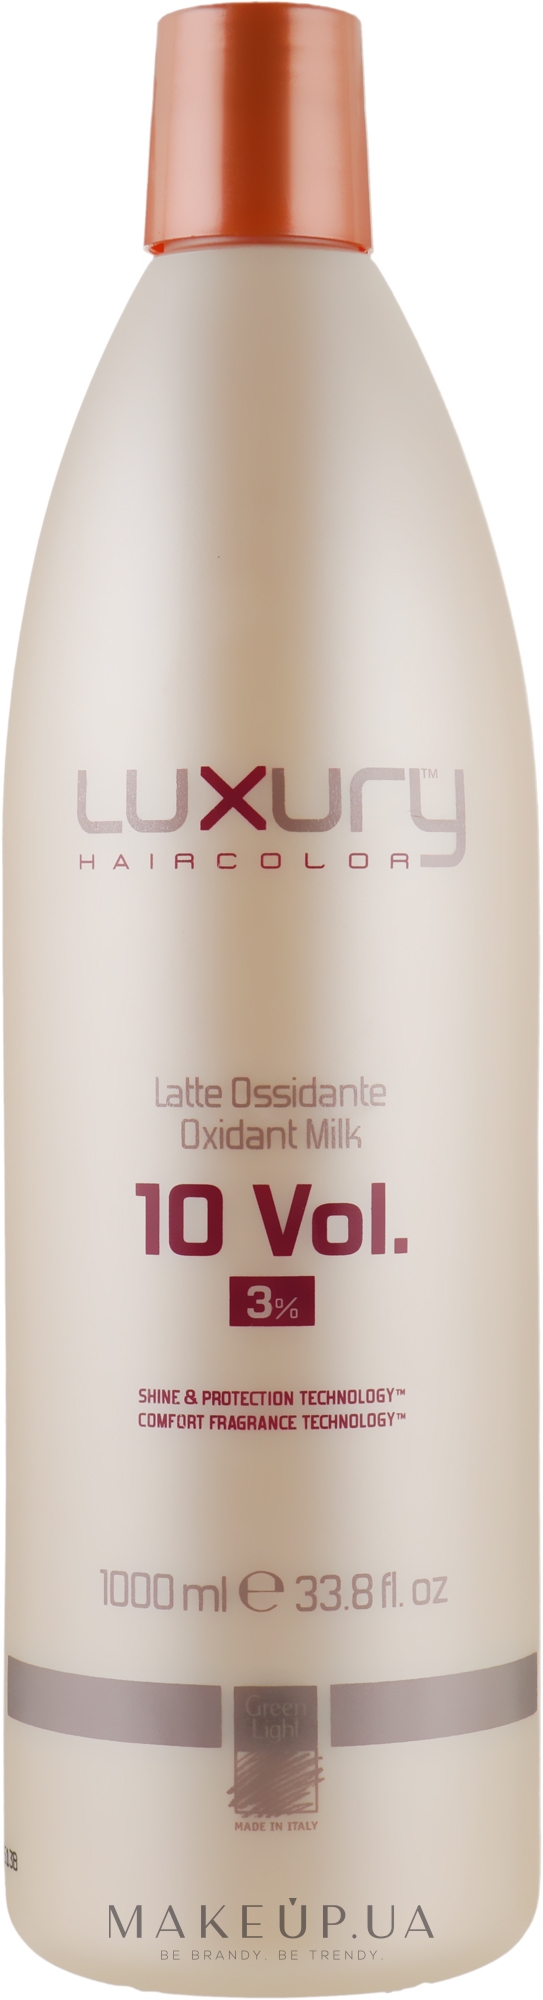 Молочний Оксидант - Green Light Luxury Haircolor Oxidant Milk 3% 10 vol. — фото 1000ml